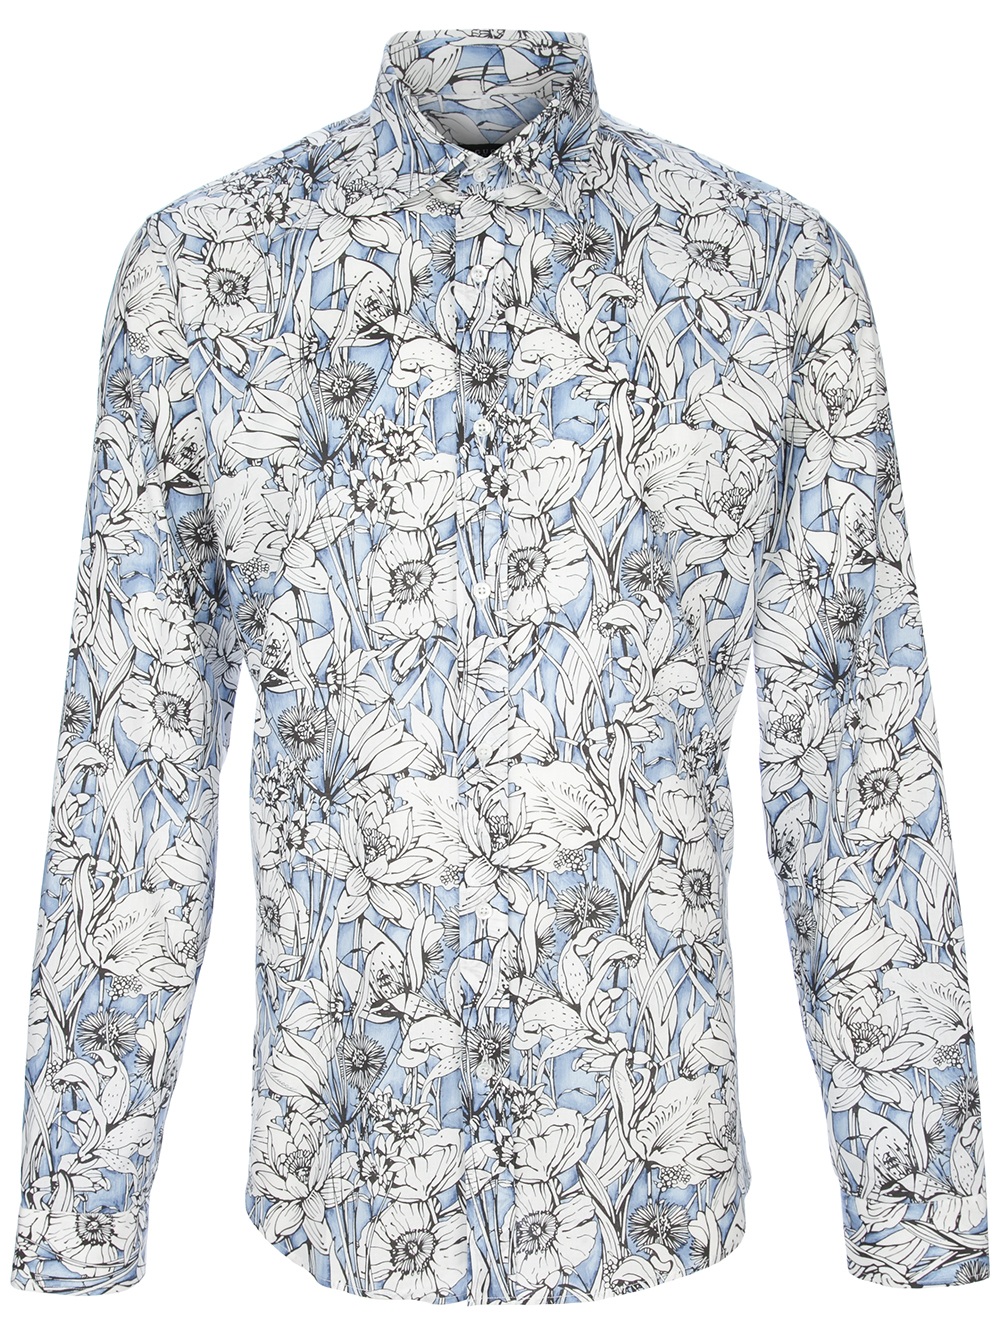 gucci men's floral shirt